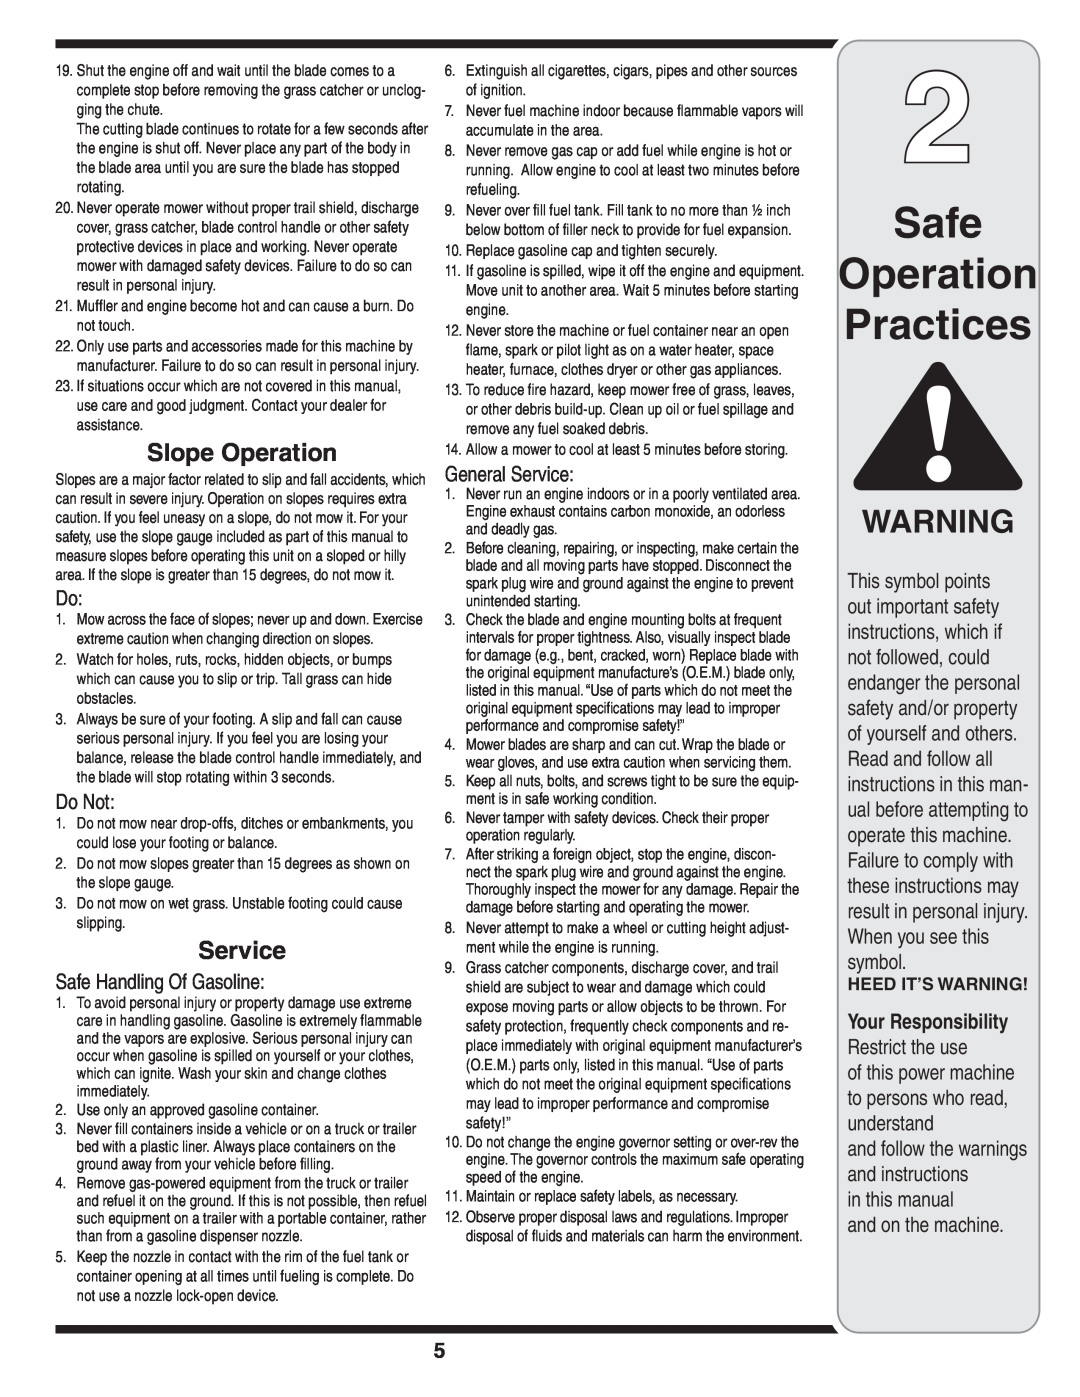 MTD V560 warranty Safe Operation Practices, Slope Operation, Service, Heed It’S Warning 